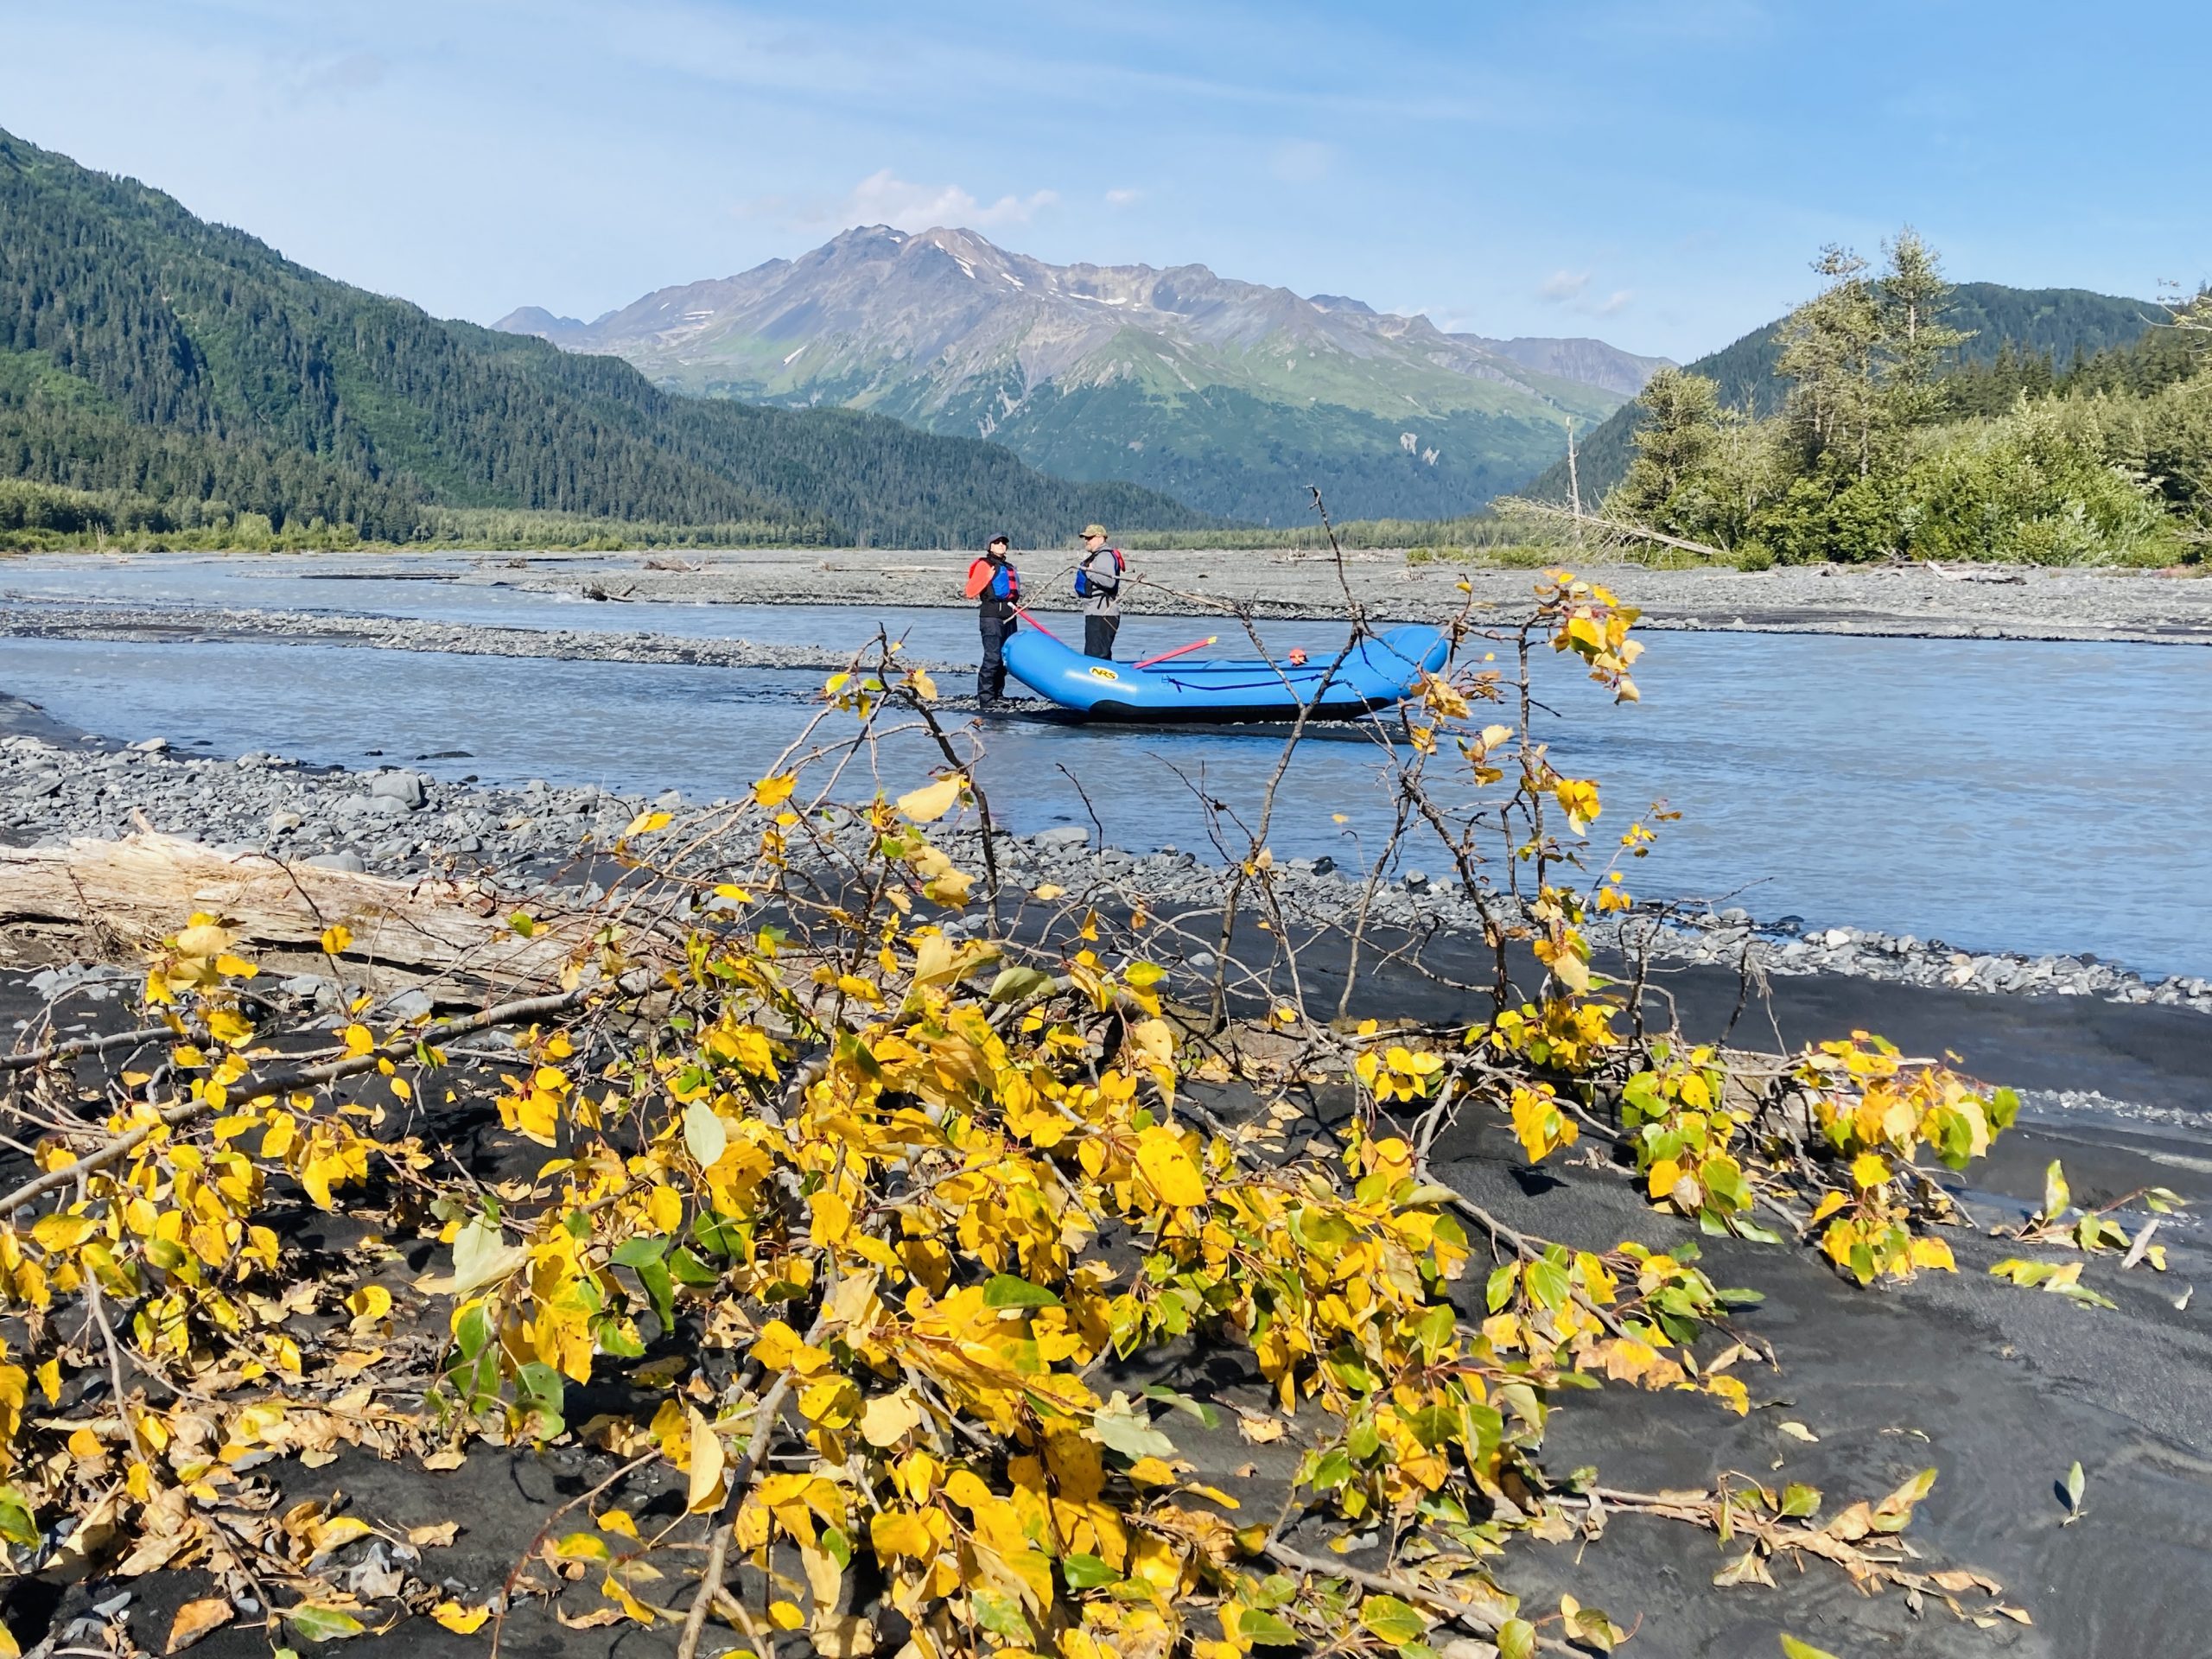 TRIP REPORT: 8/7/22 Rafting Resurrection River